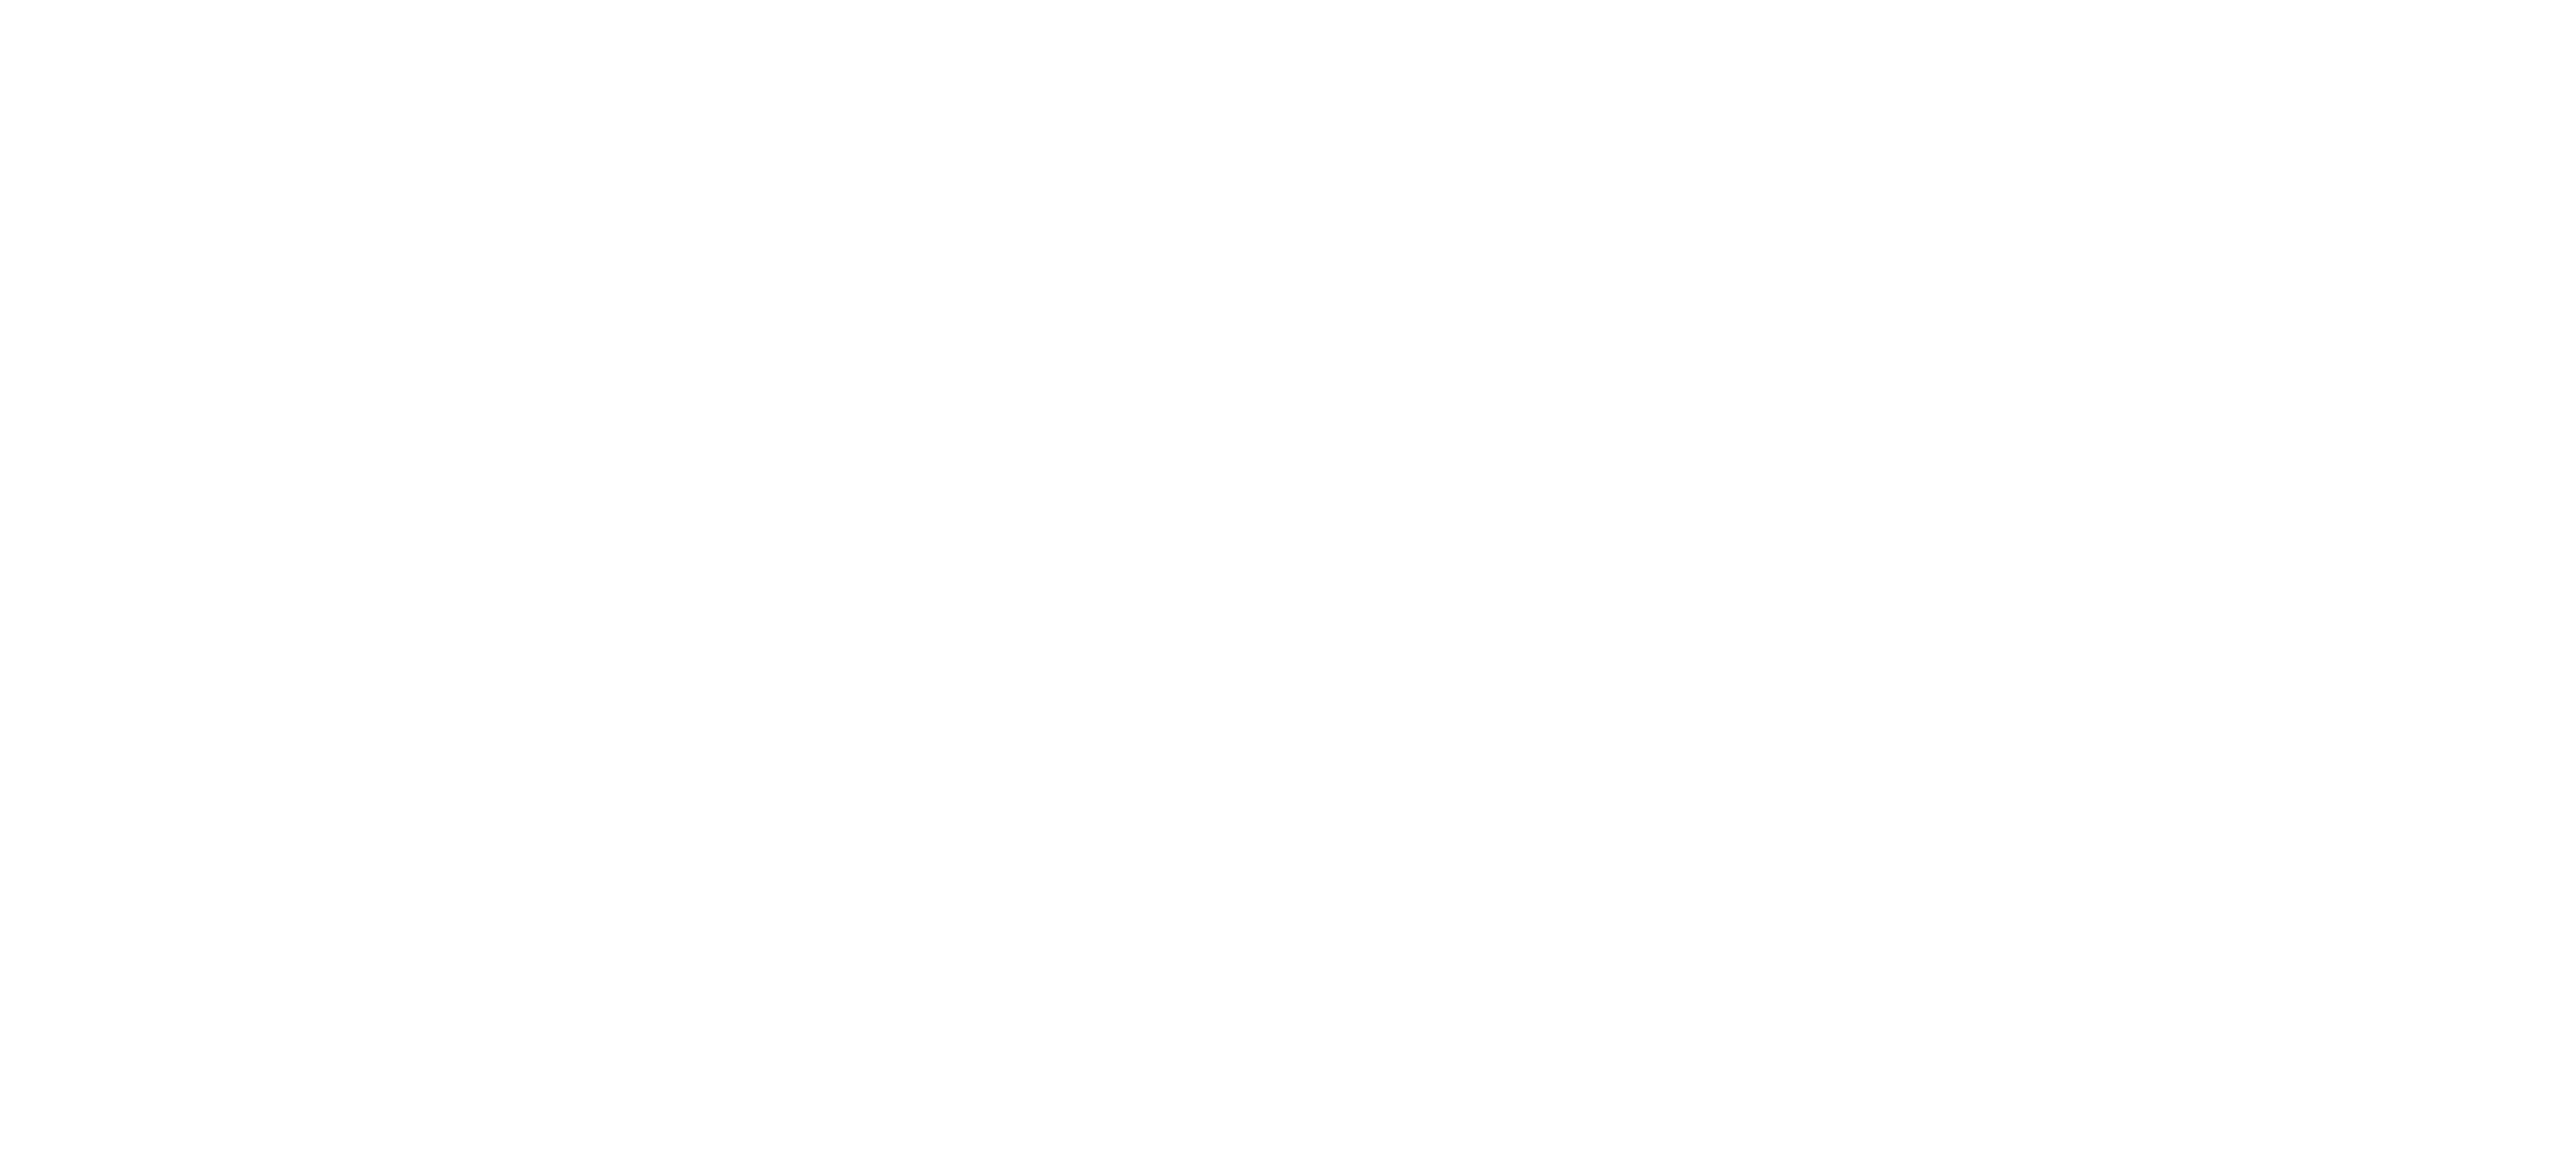 auburn-rise-logo-white